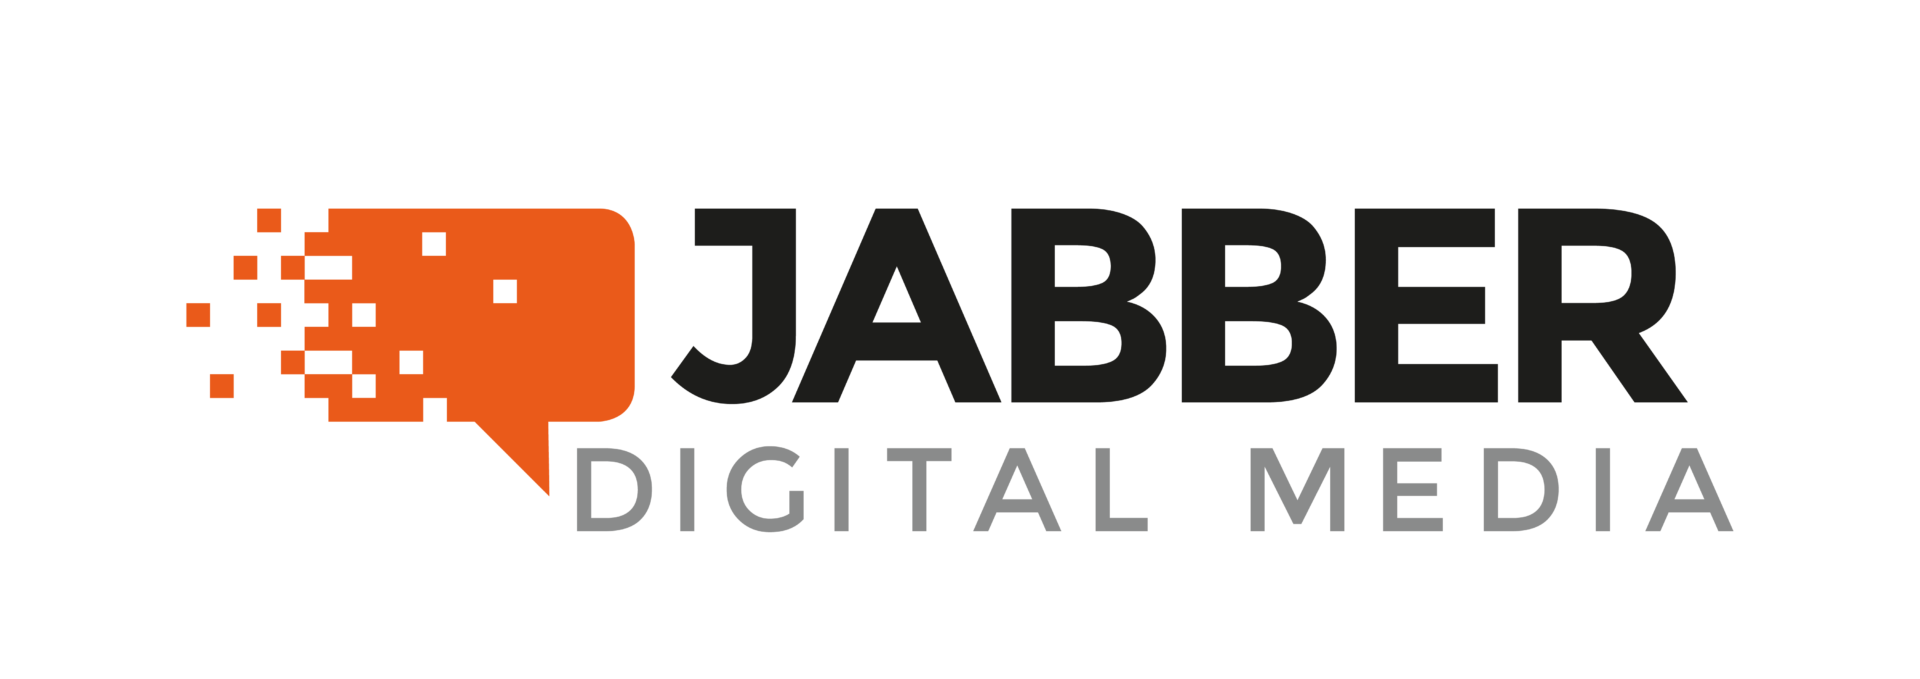 Jabber Digital Media